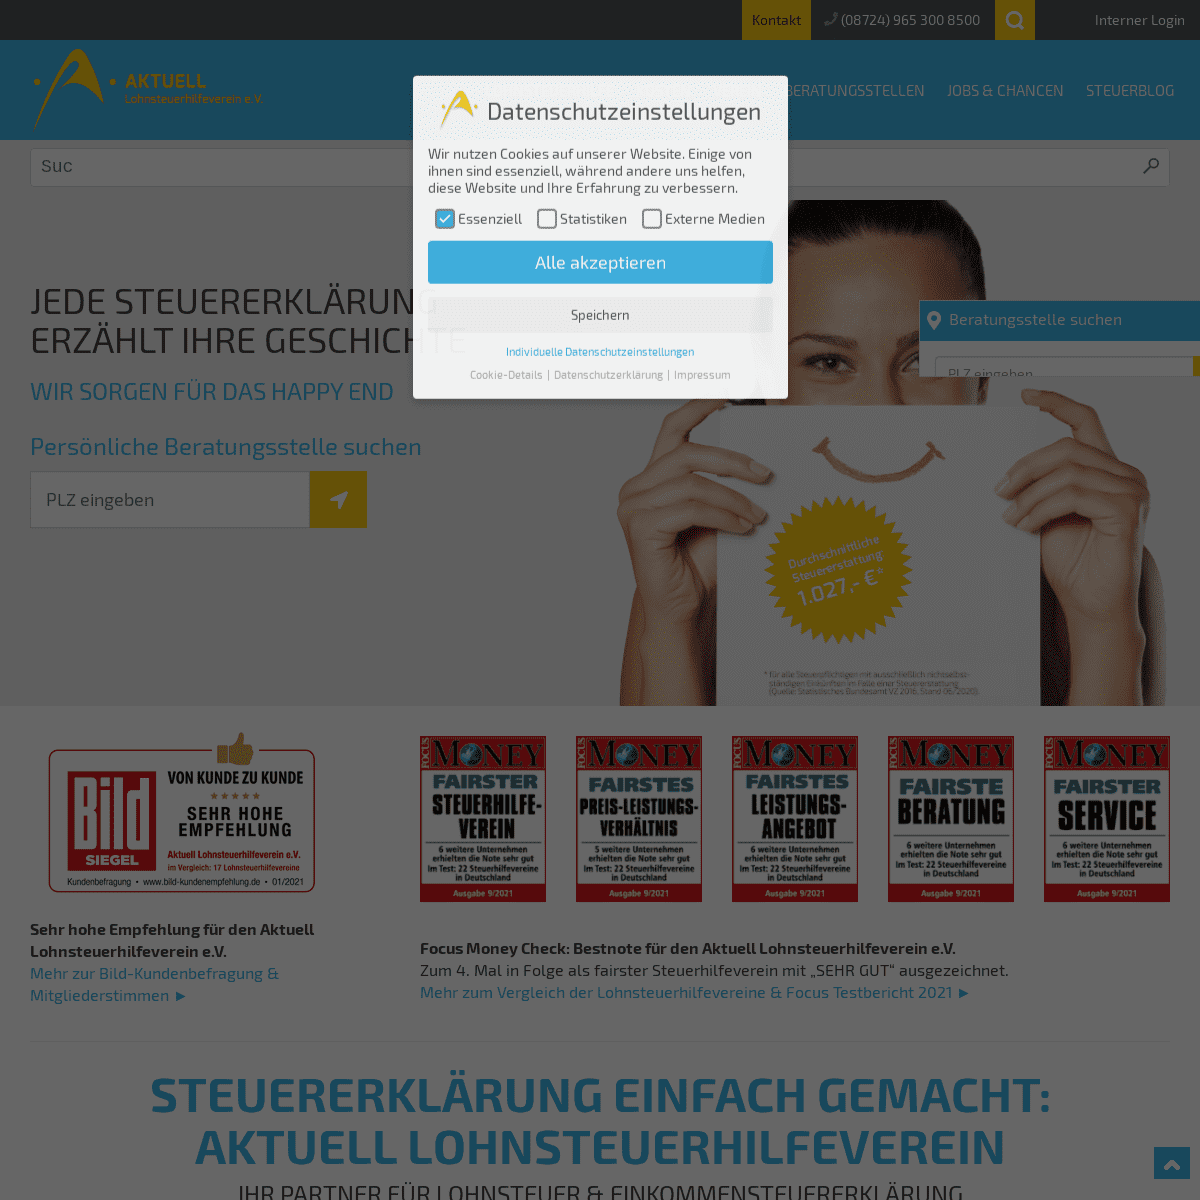 A complete backup of https://aktuell-verein.de